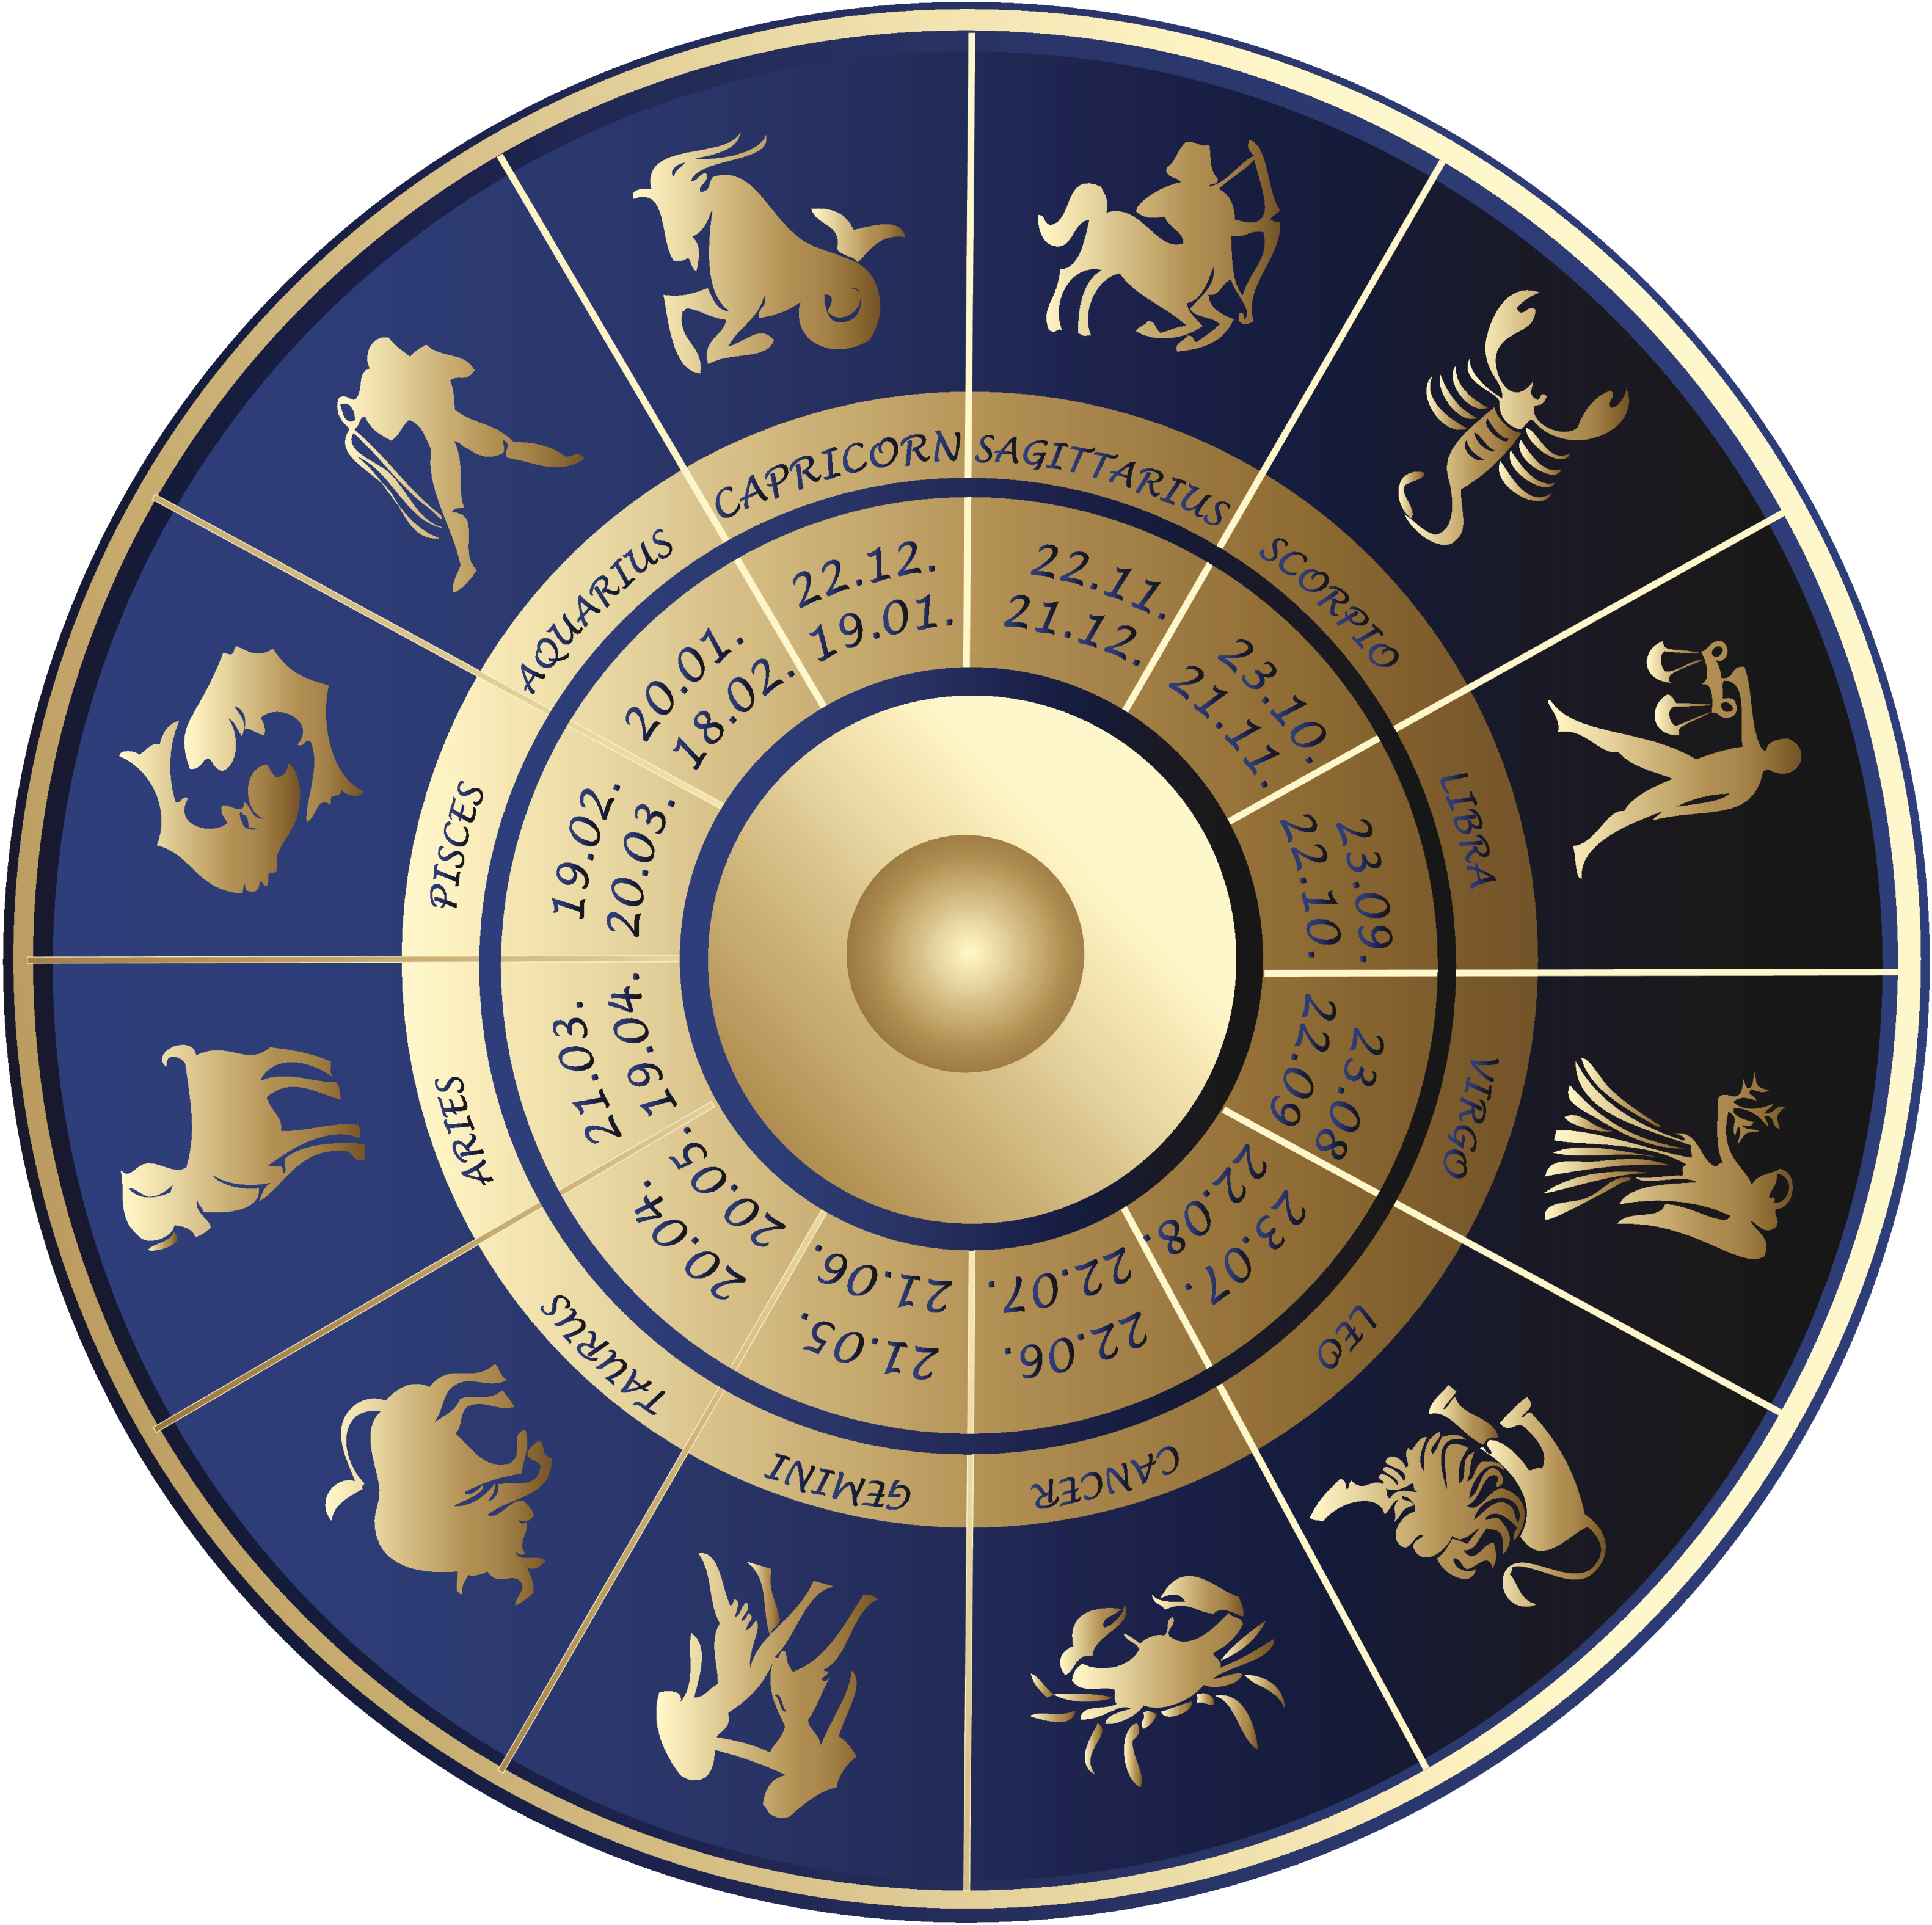 Different Zodiac Symbols